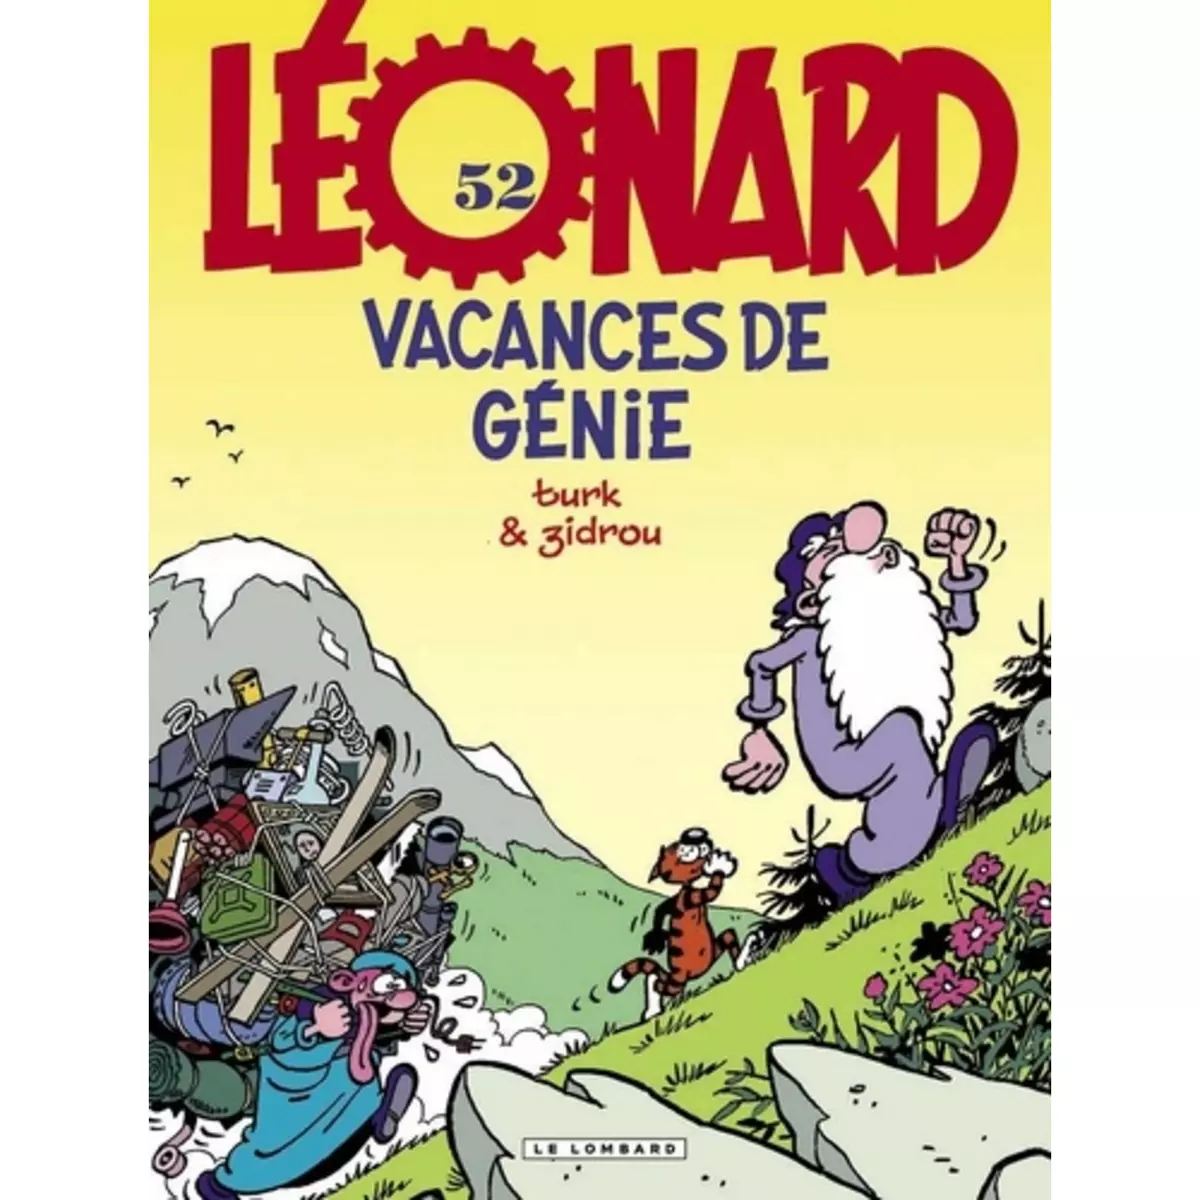  LEONARD TOME 52 : VACANCES DE GENIE, Turk